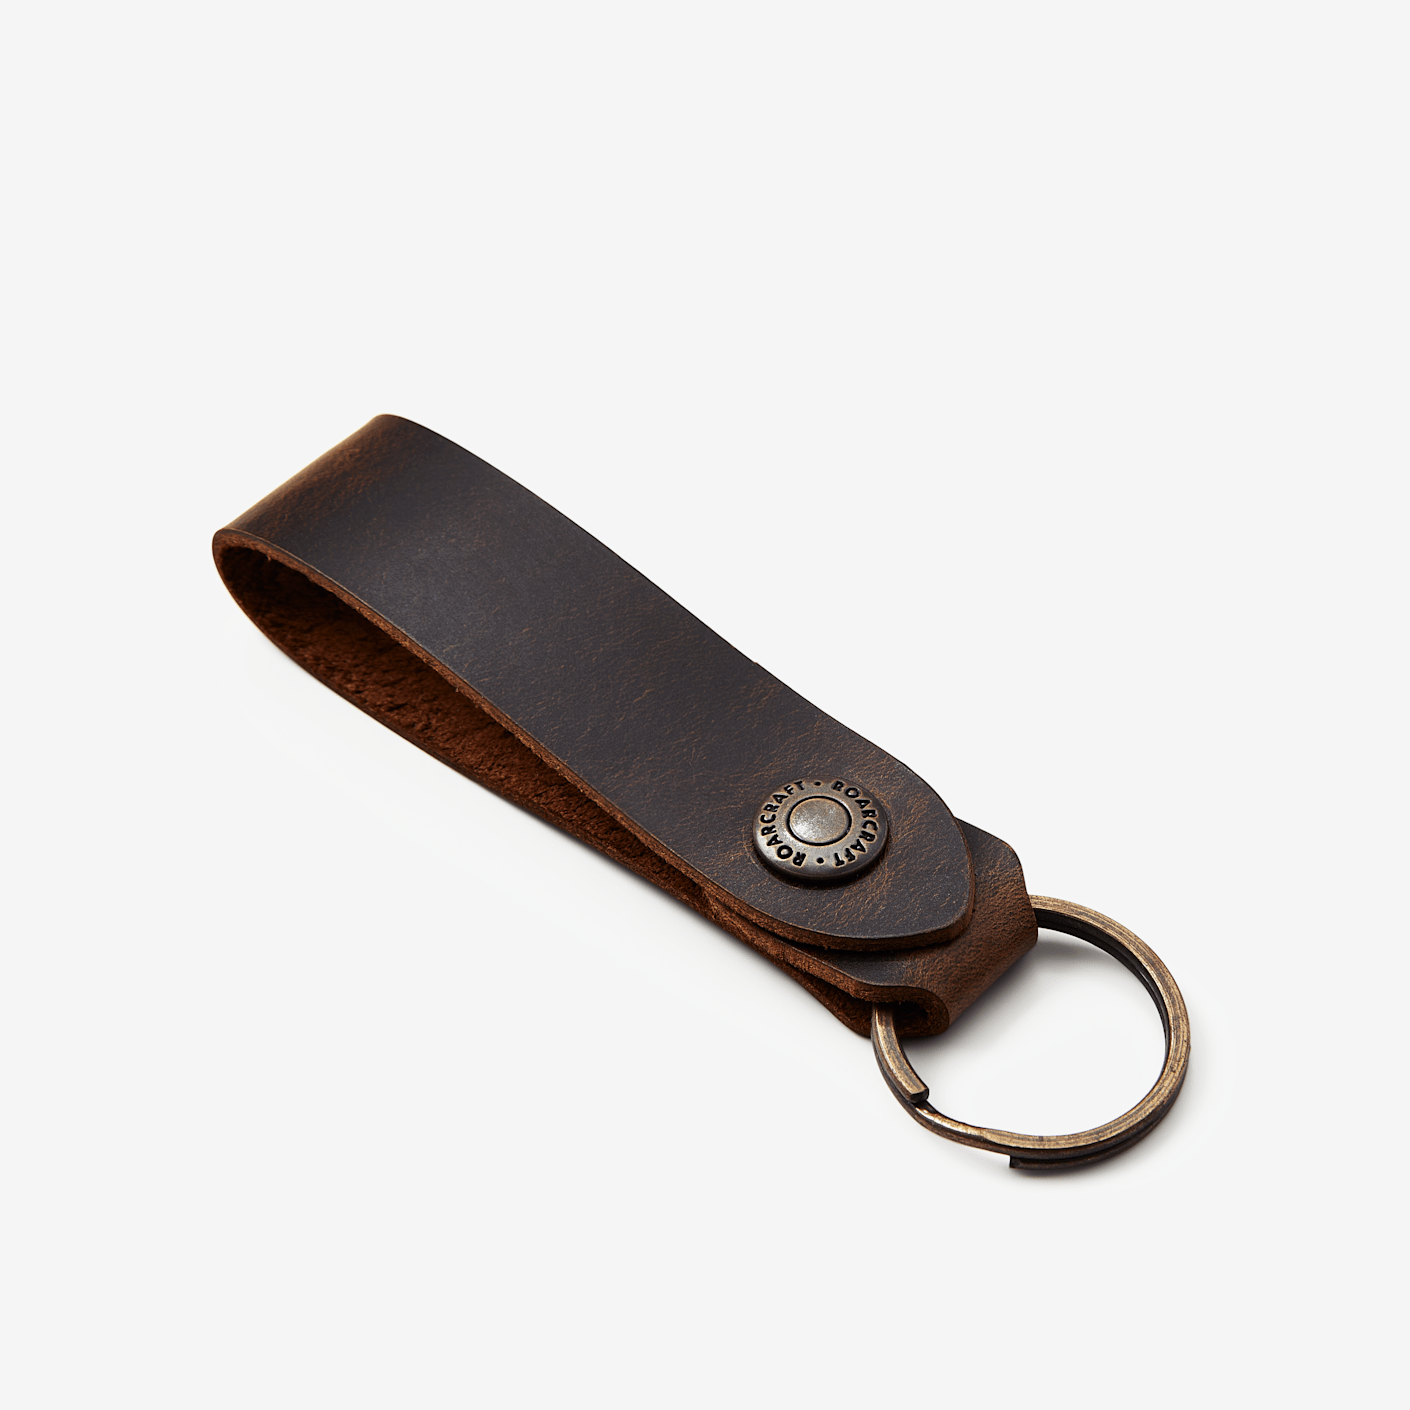 Roarcraft Co. Leather Key Fob